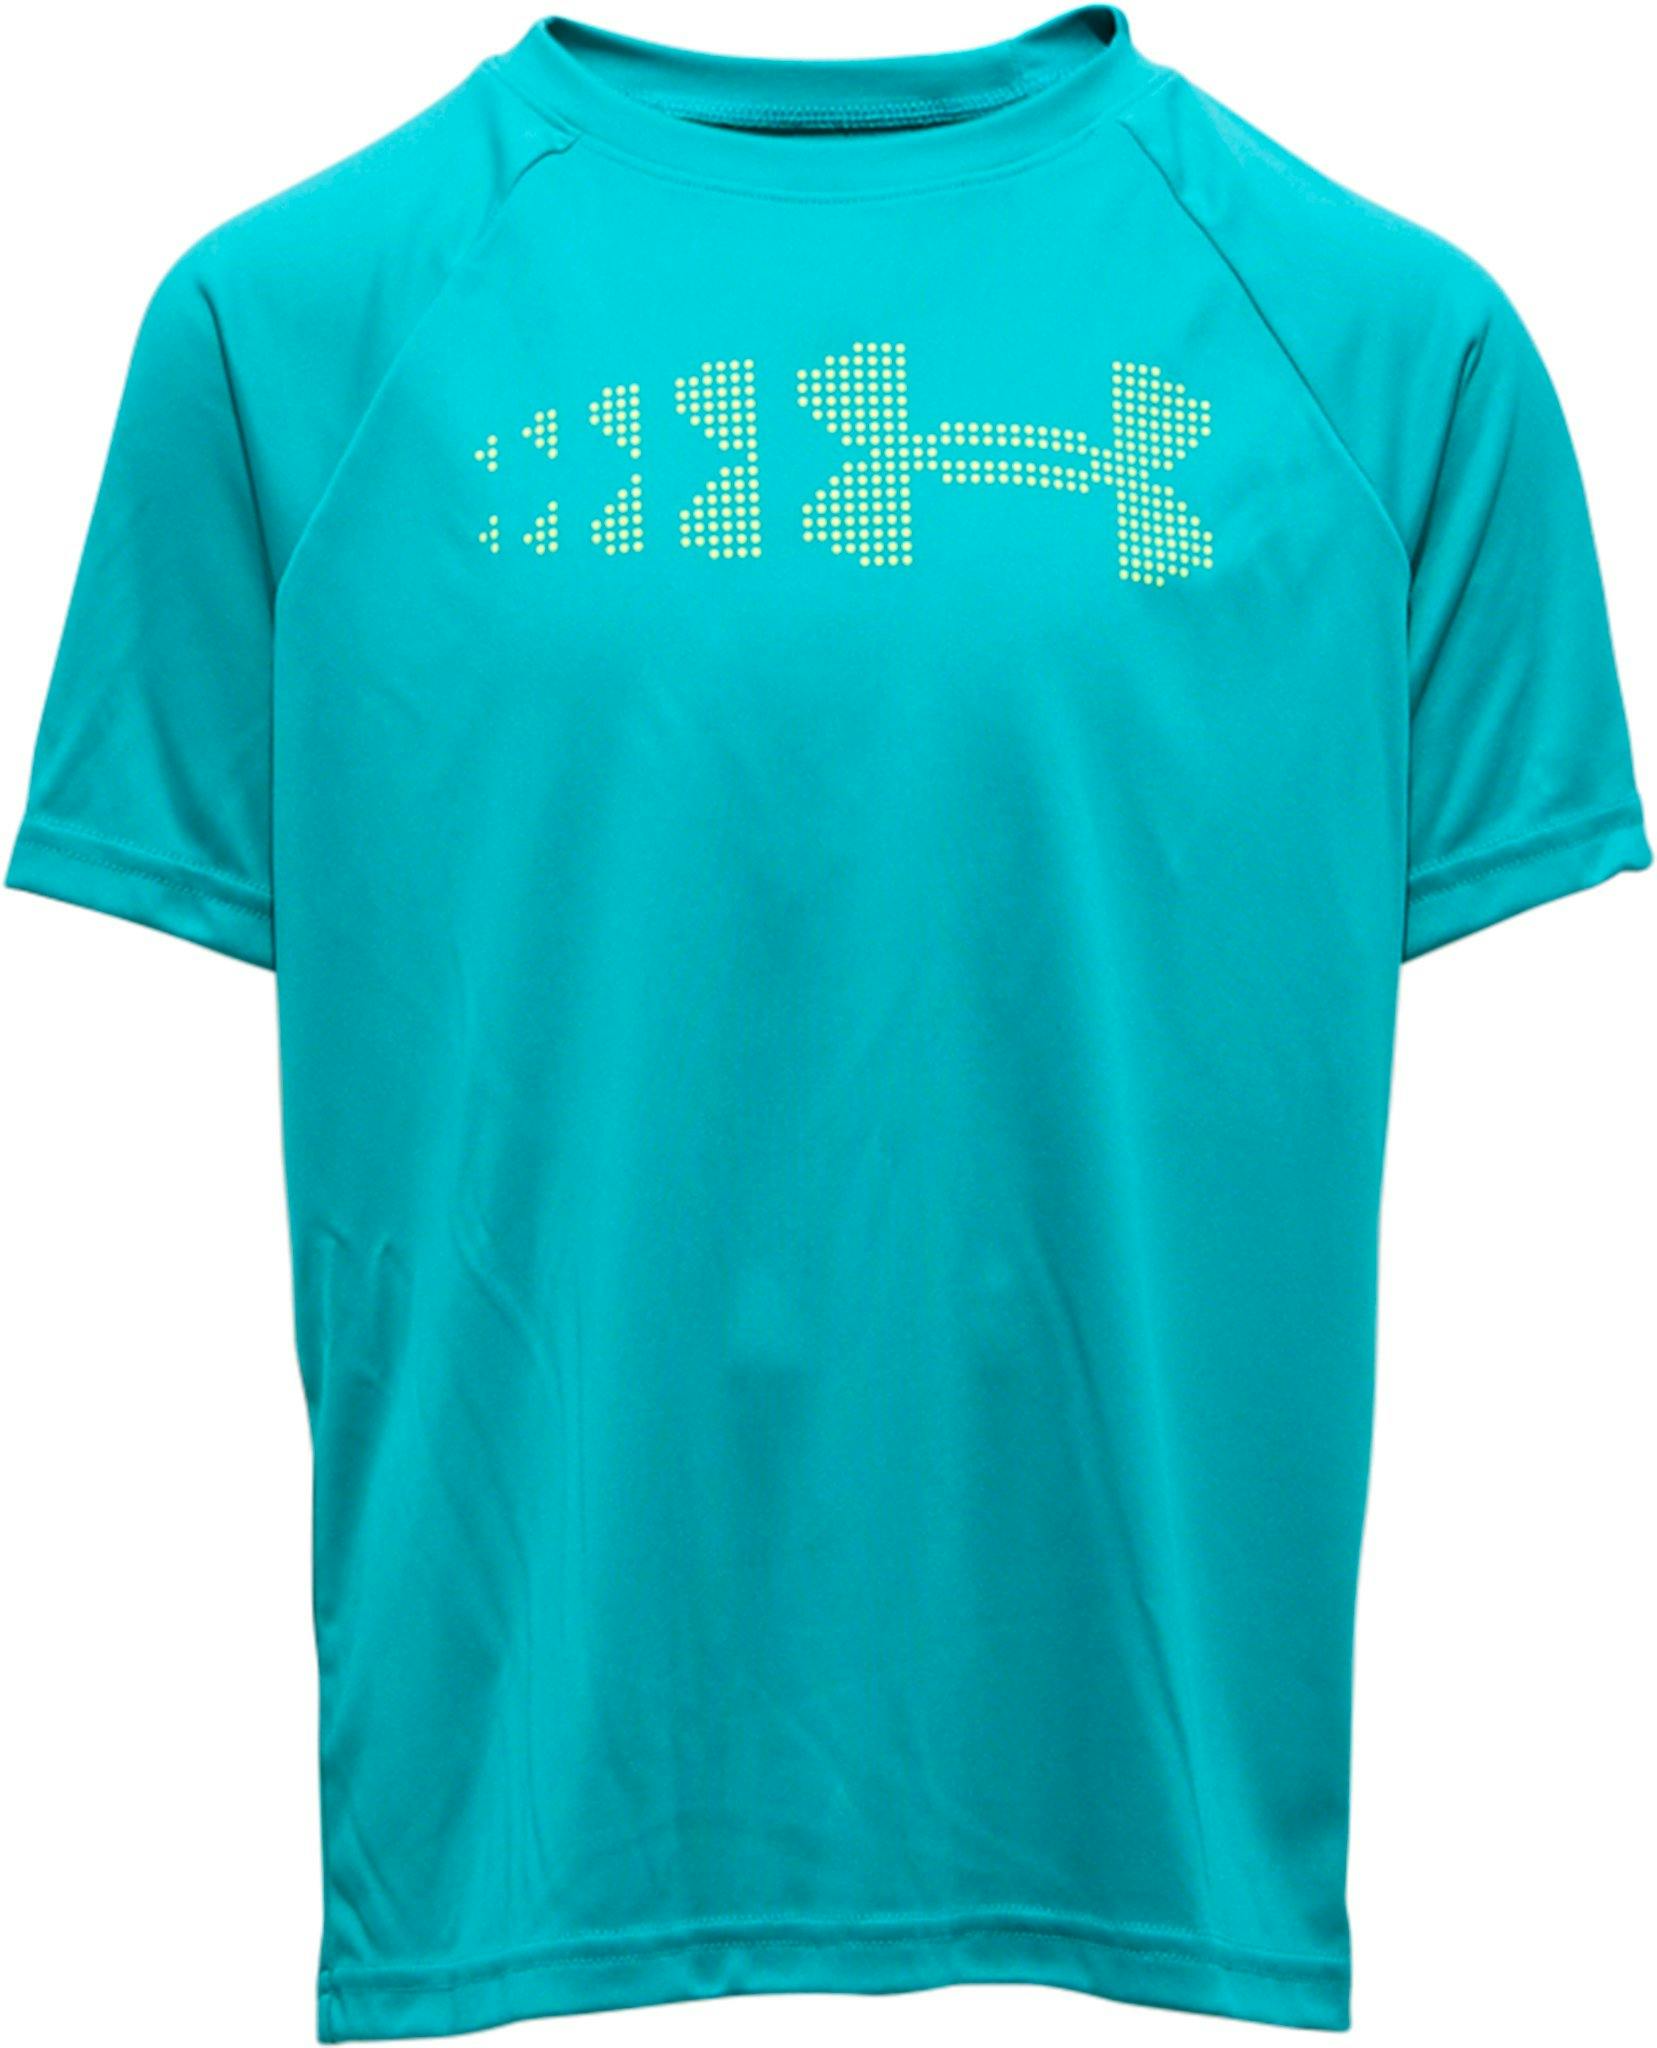 Product image for UA Tech Stadium Lights Short Sleeve T-Shirt - Boys